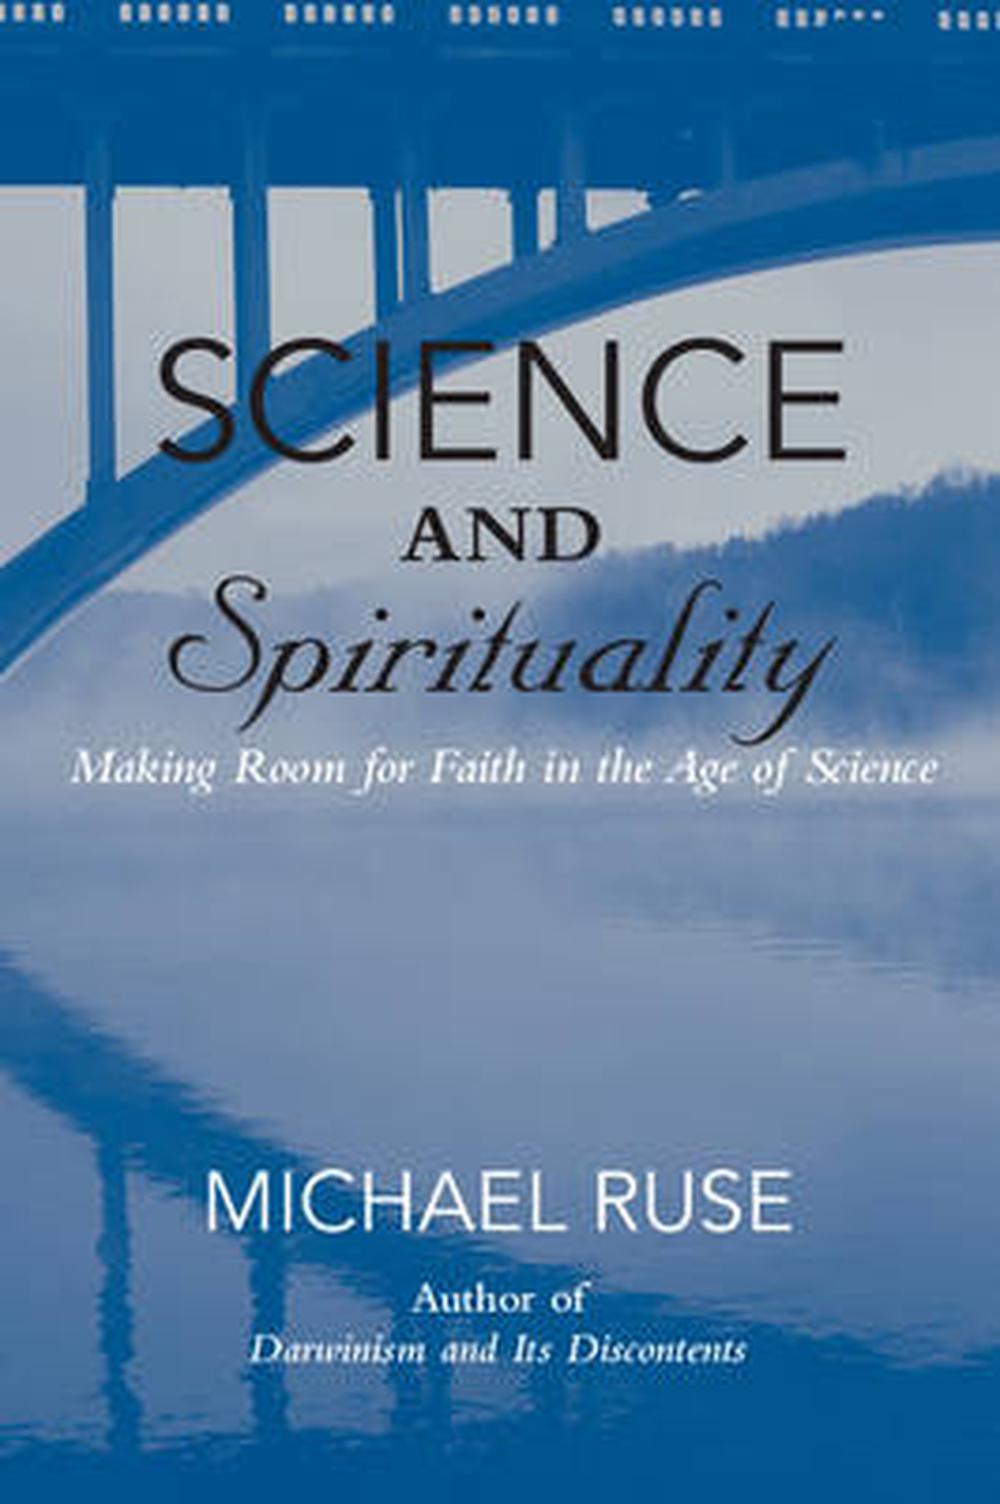 Science and Spirituality (Paperback) - Walmart.com